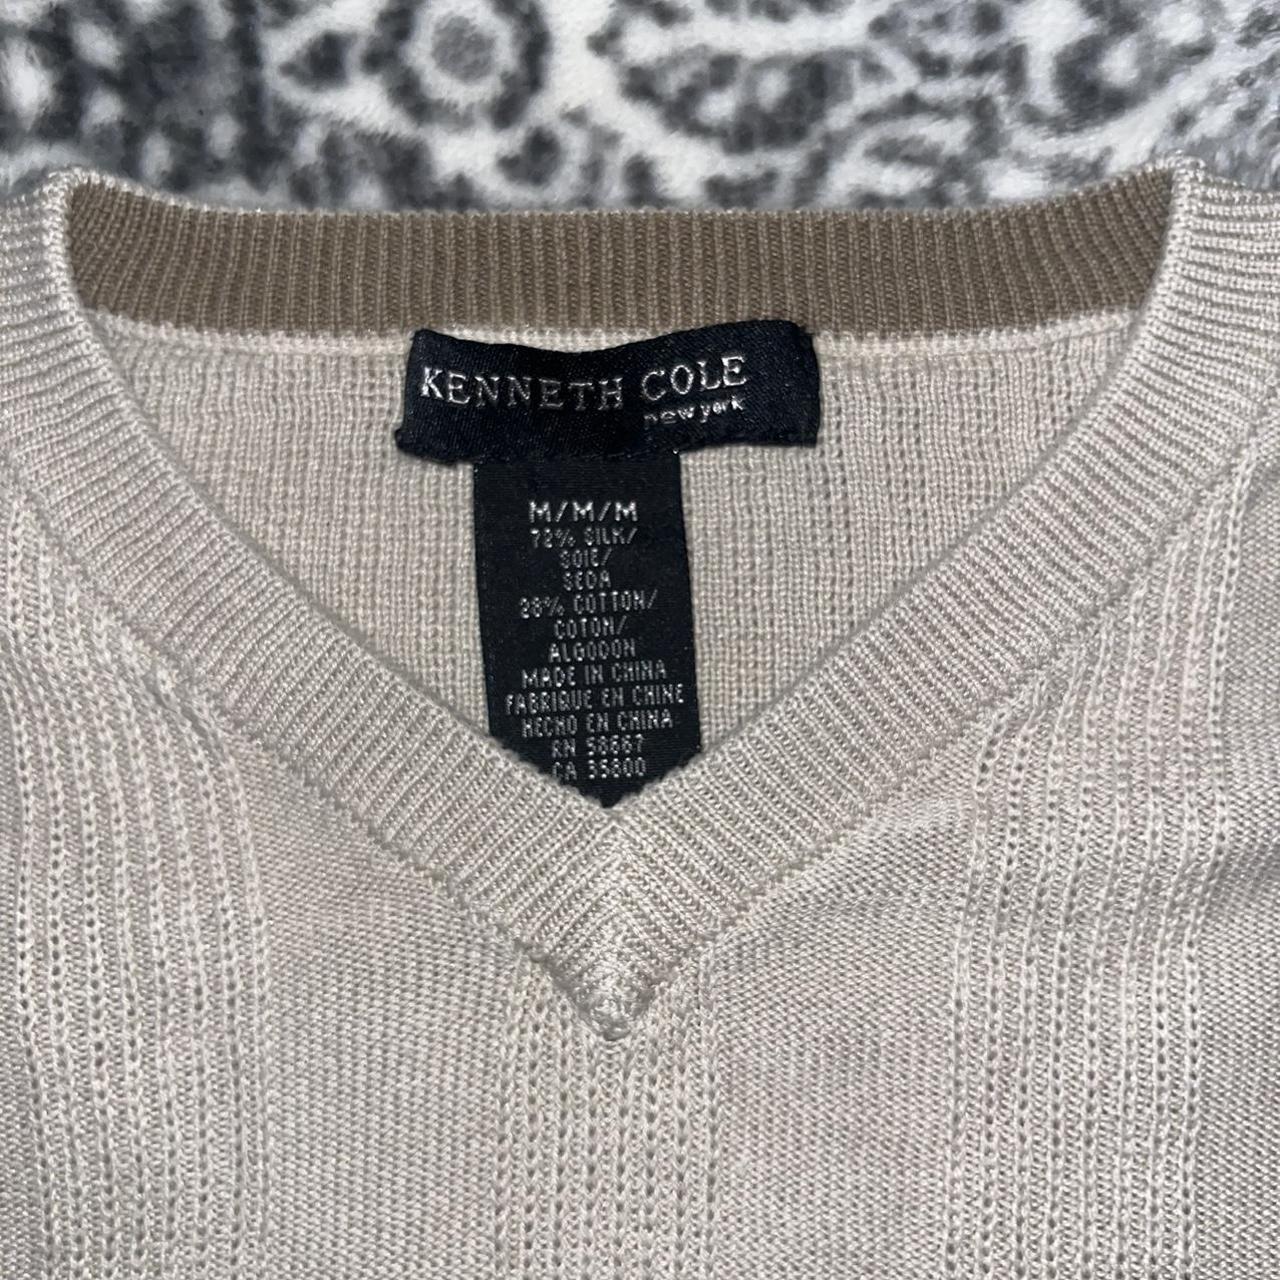 Kenneth Cole Men's Cream Shirt (4)